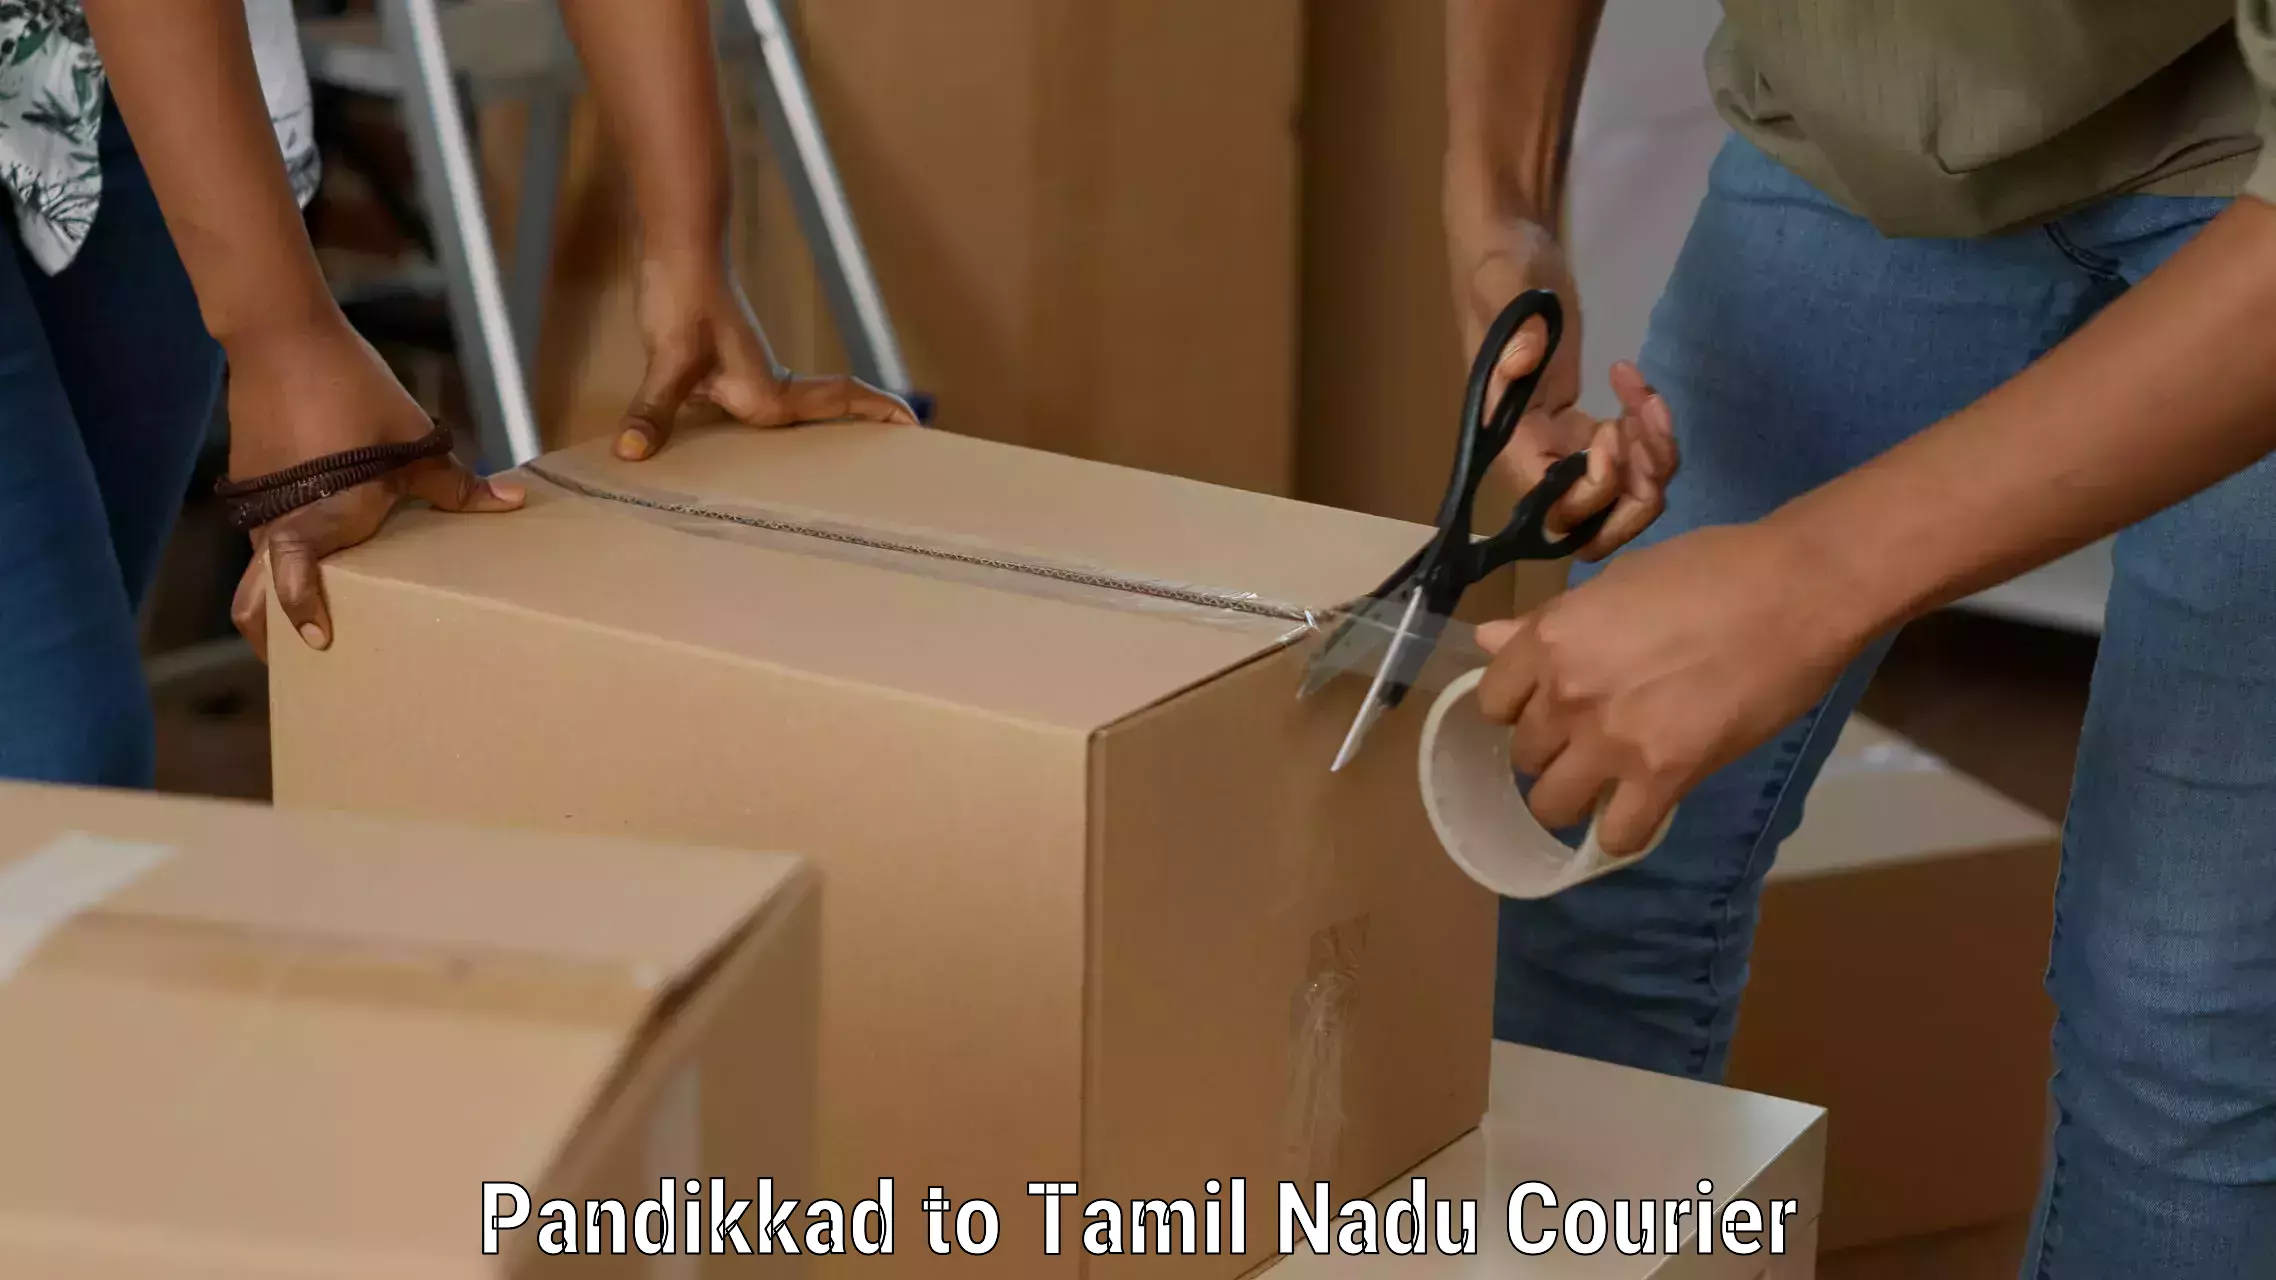 Courier service partnerships Pandikkad to Dharmapuri